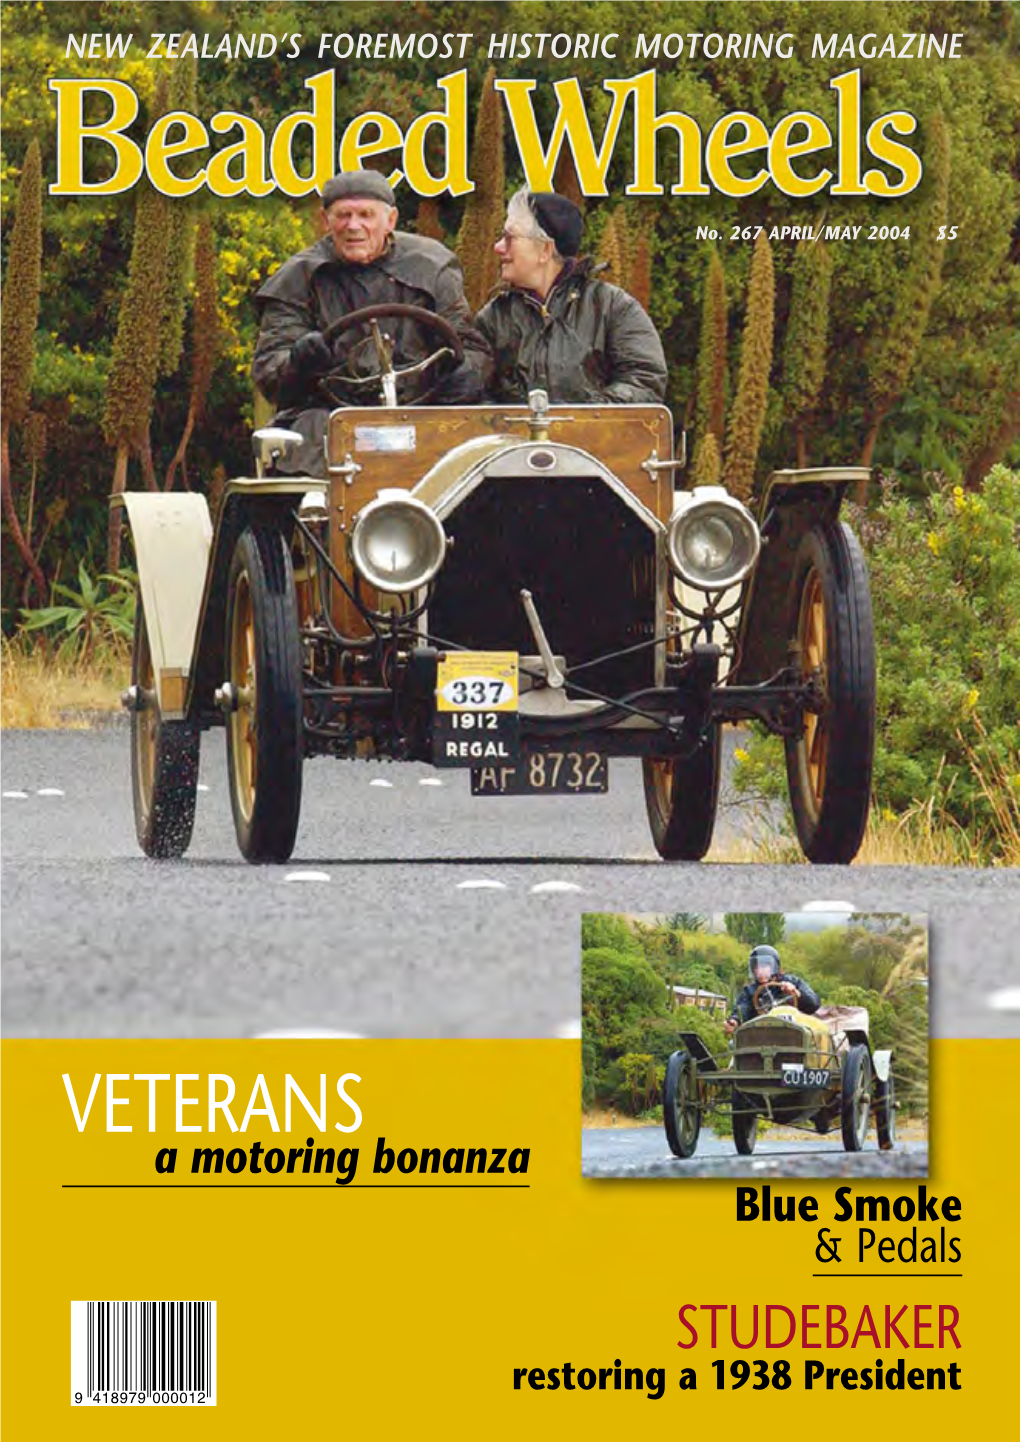 Veterans a Motoring Bonanza Blue Smoke & Pedals Studebaker